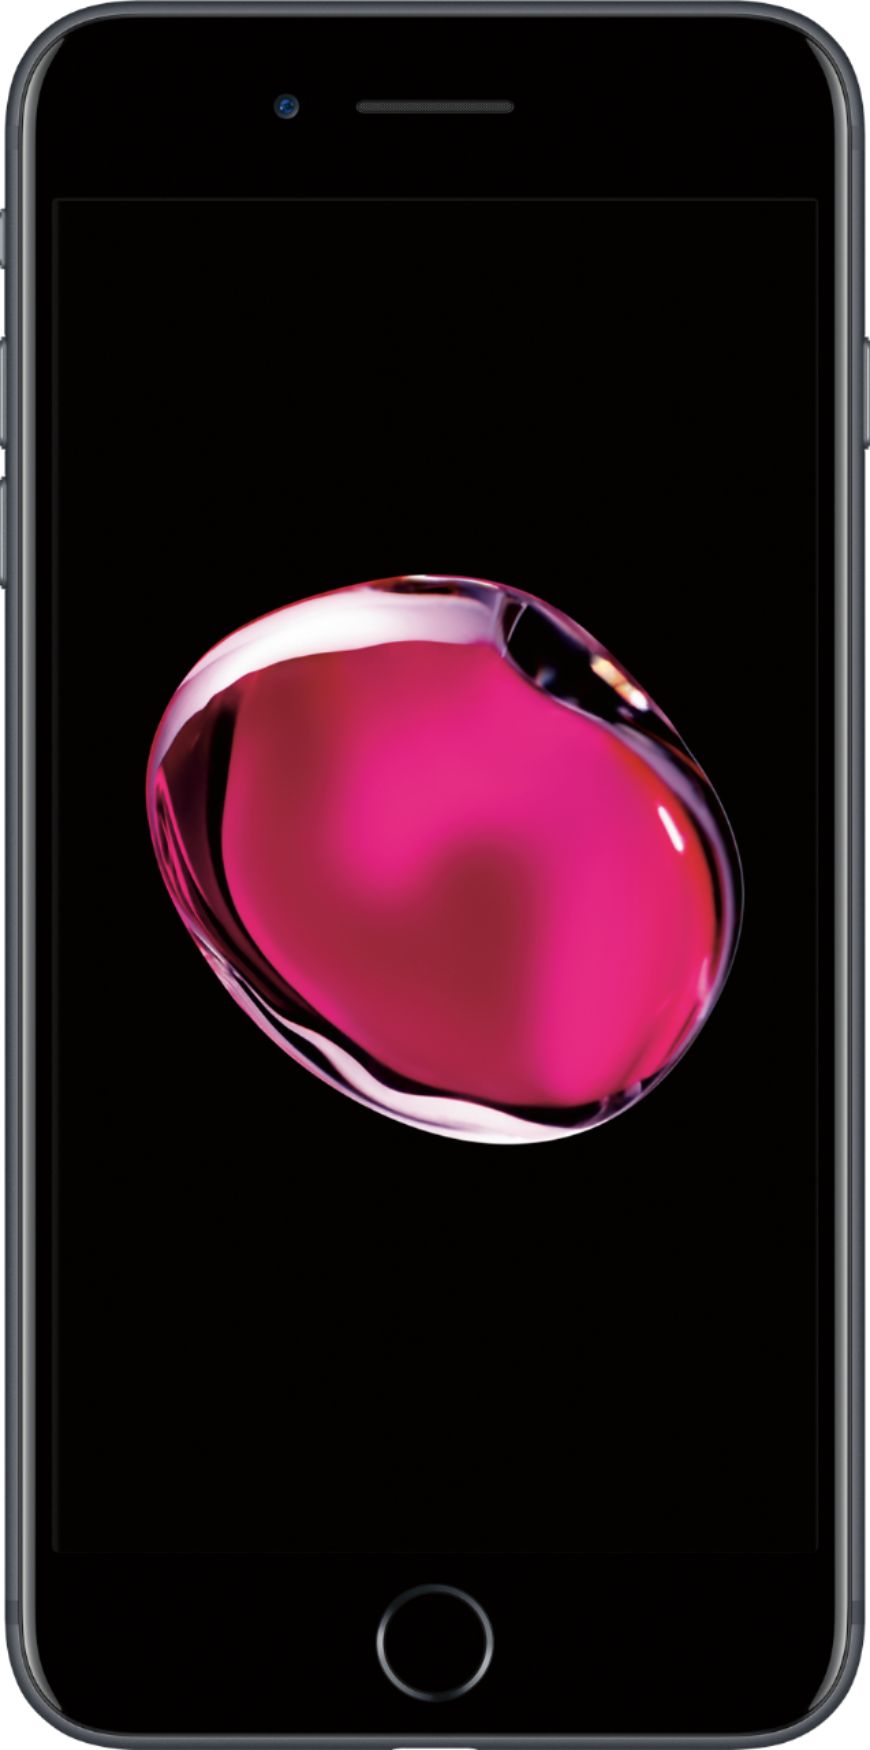 Apple iPhone 7 Plus 32GB Black (Verizon - Best Buy